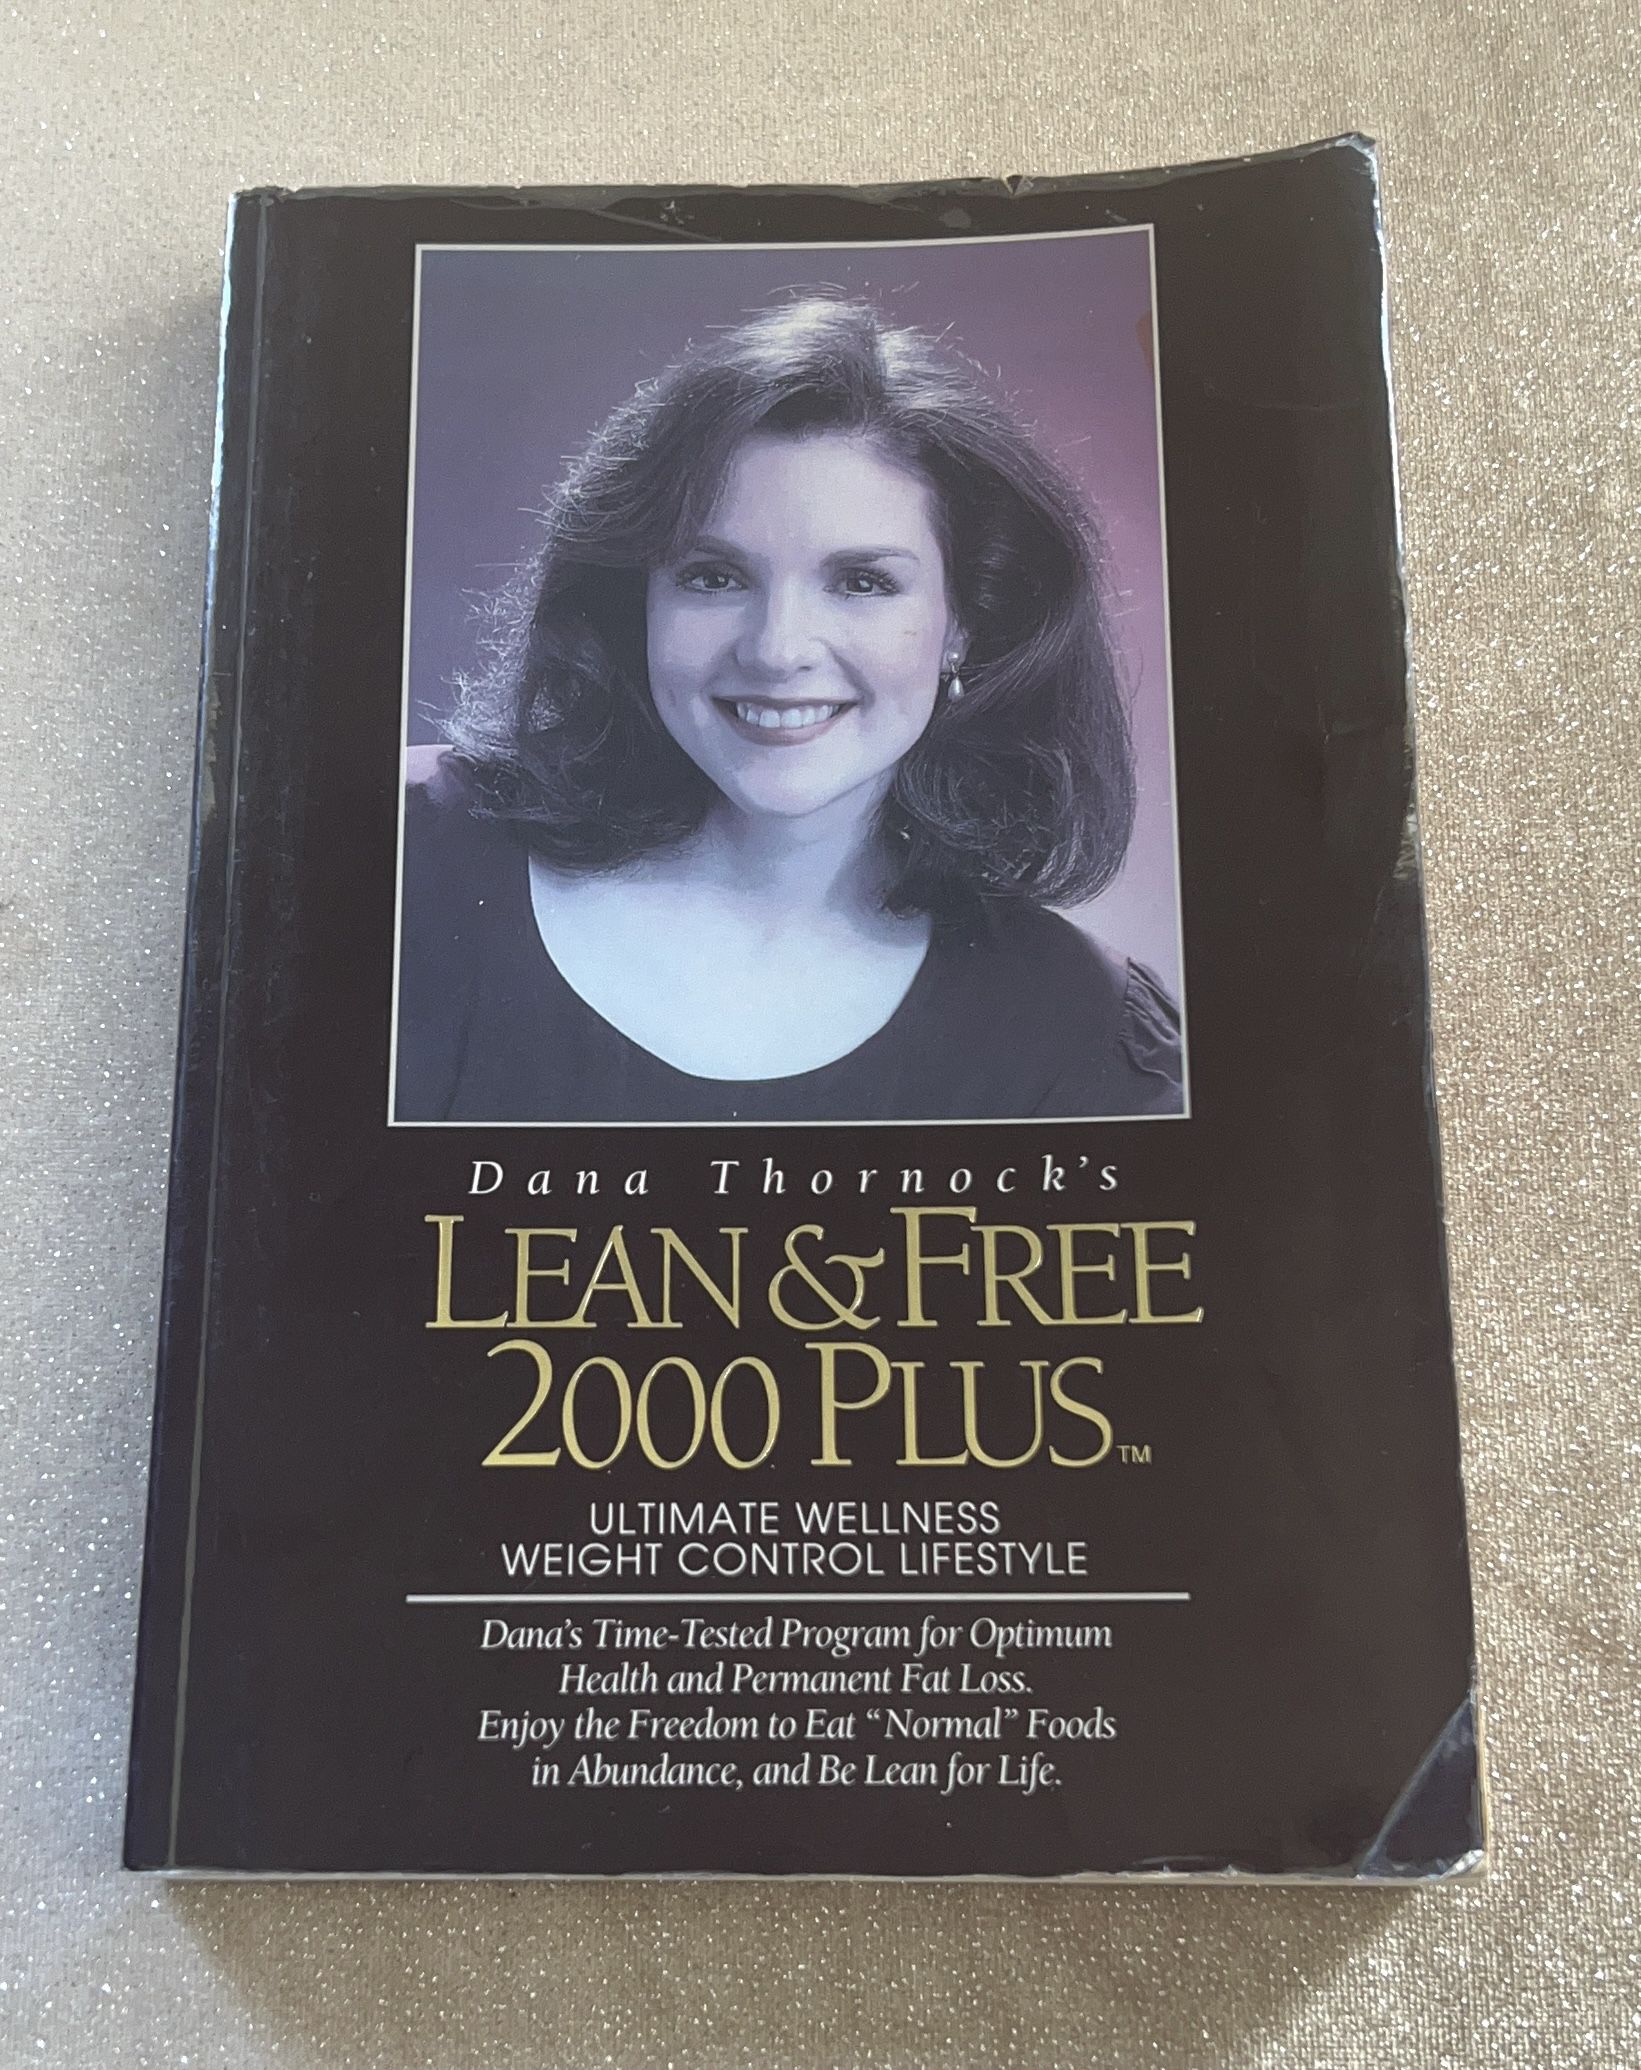 Lean & Free 2000 Plus by Dana Thornock's